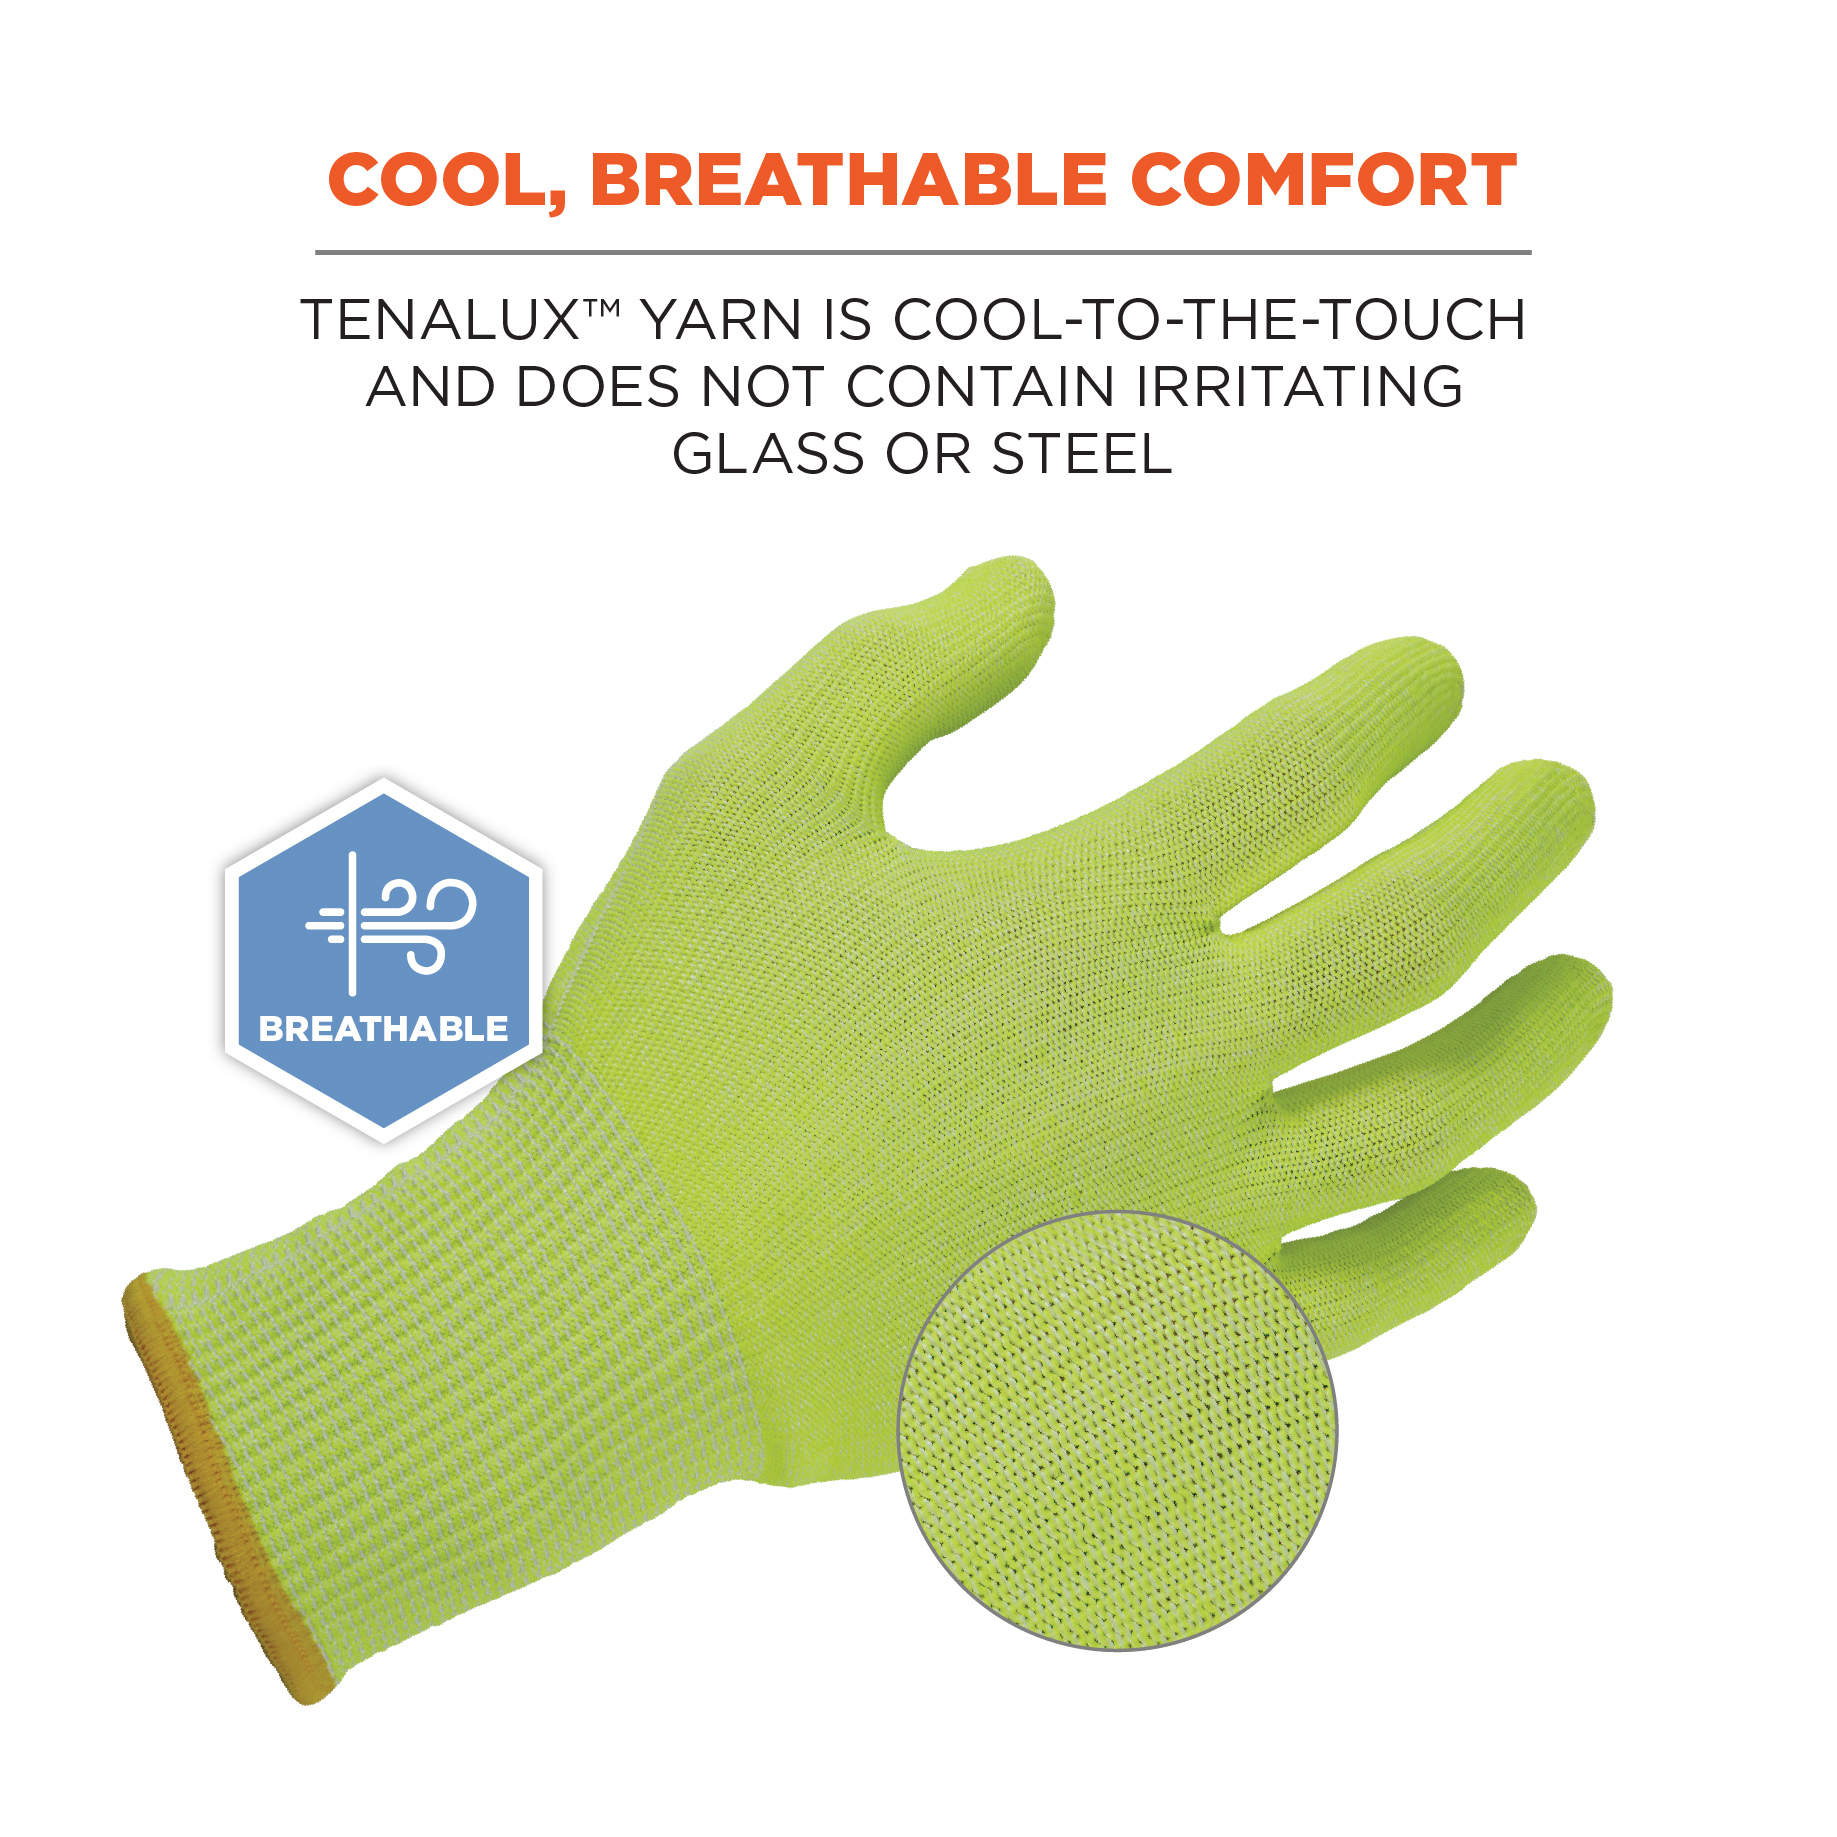 https://www.ergodyne.com/sites/default/files/product-images/18012-7040-cut-resistant-food-grade-gloves-lime-cool-breathable-comfort_0.jpg